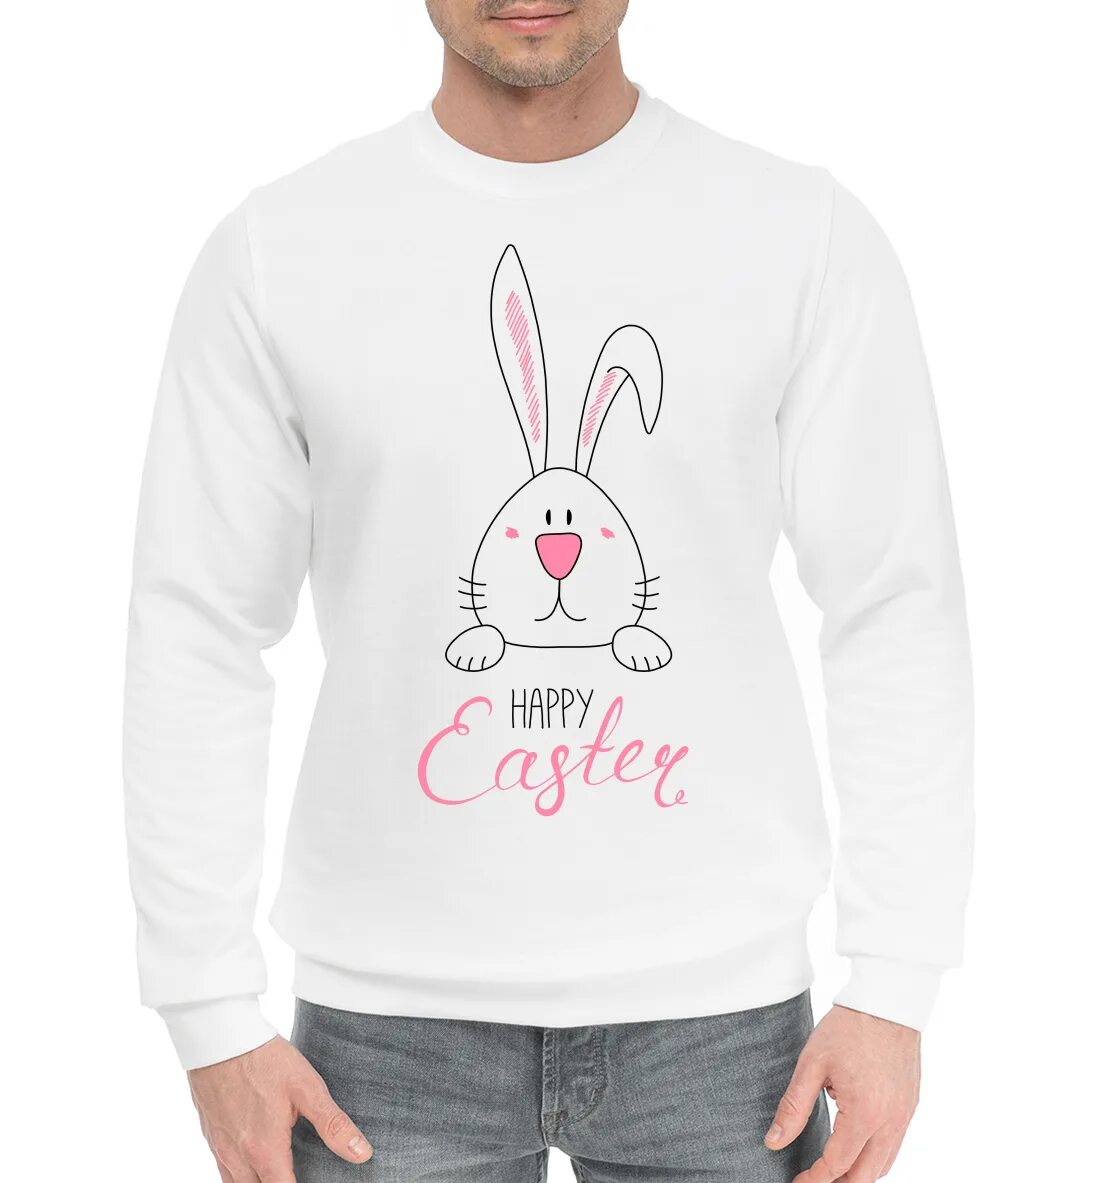 Happy Bunny толстовка. Happy Easter свитера мужские. Глупый кролик